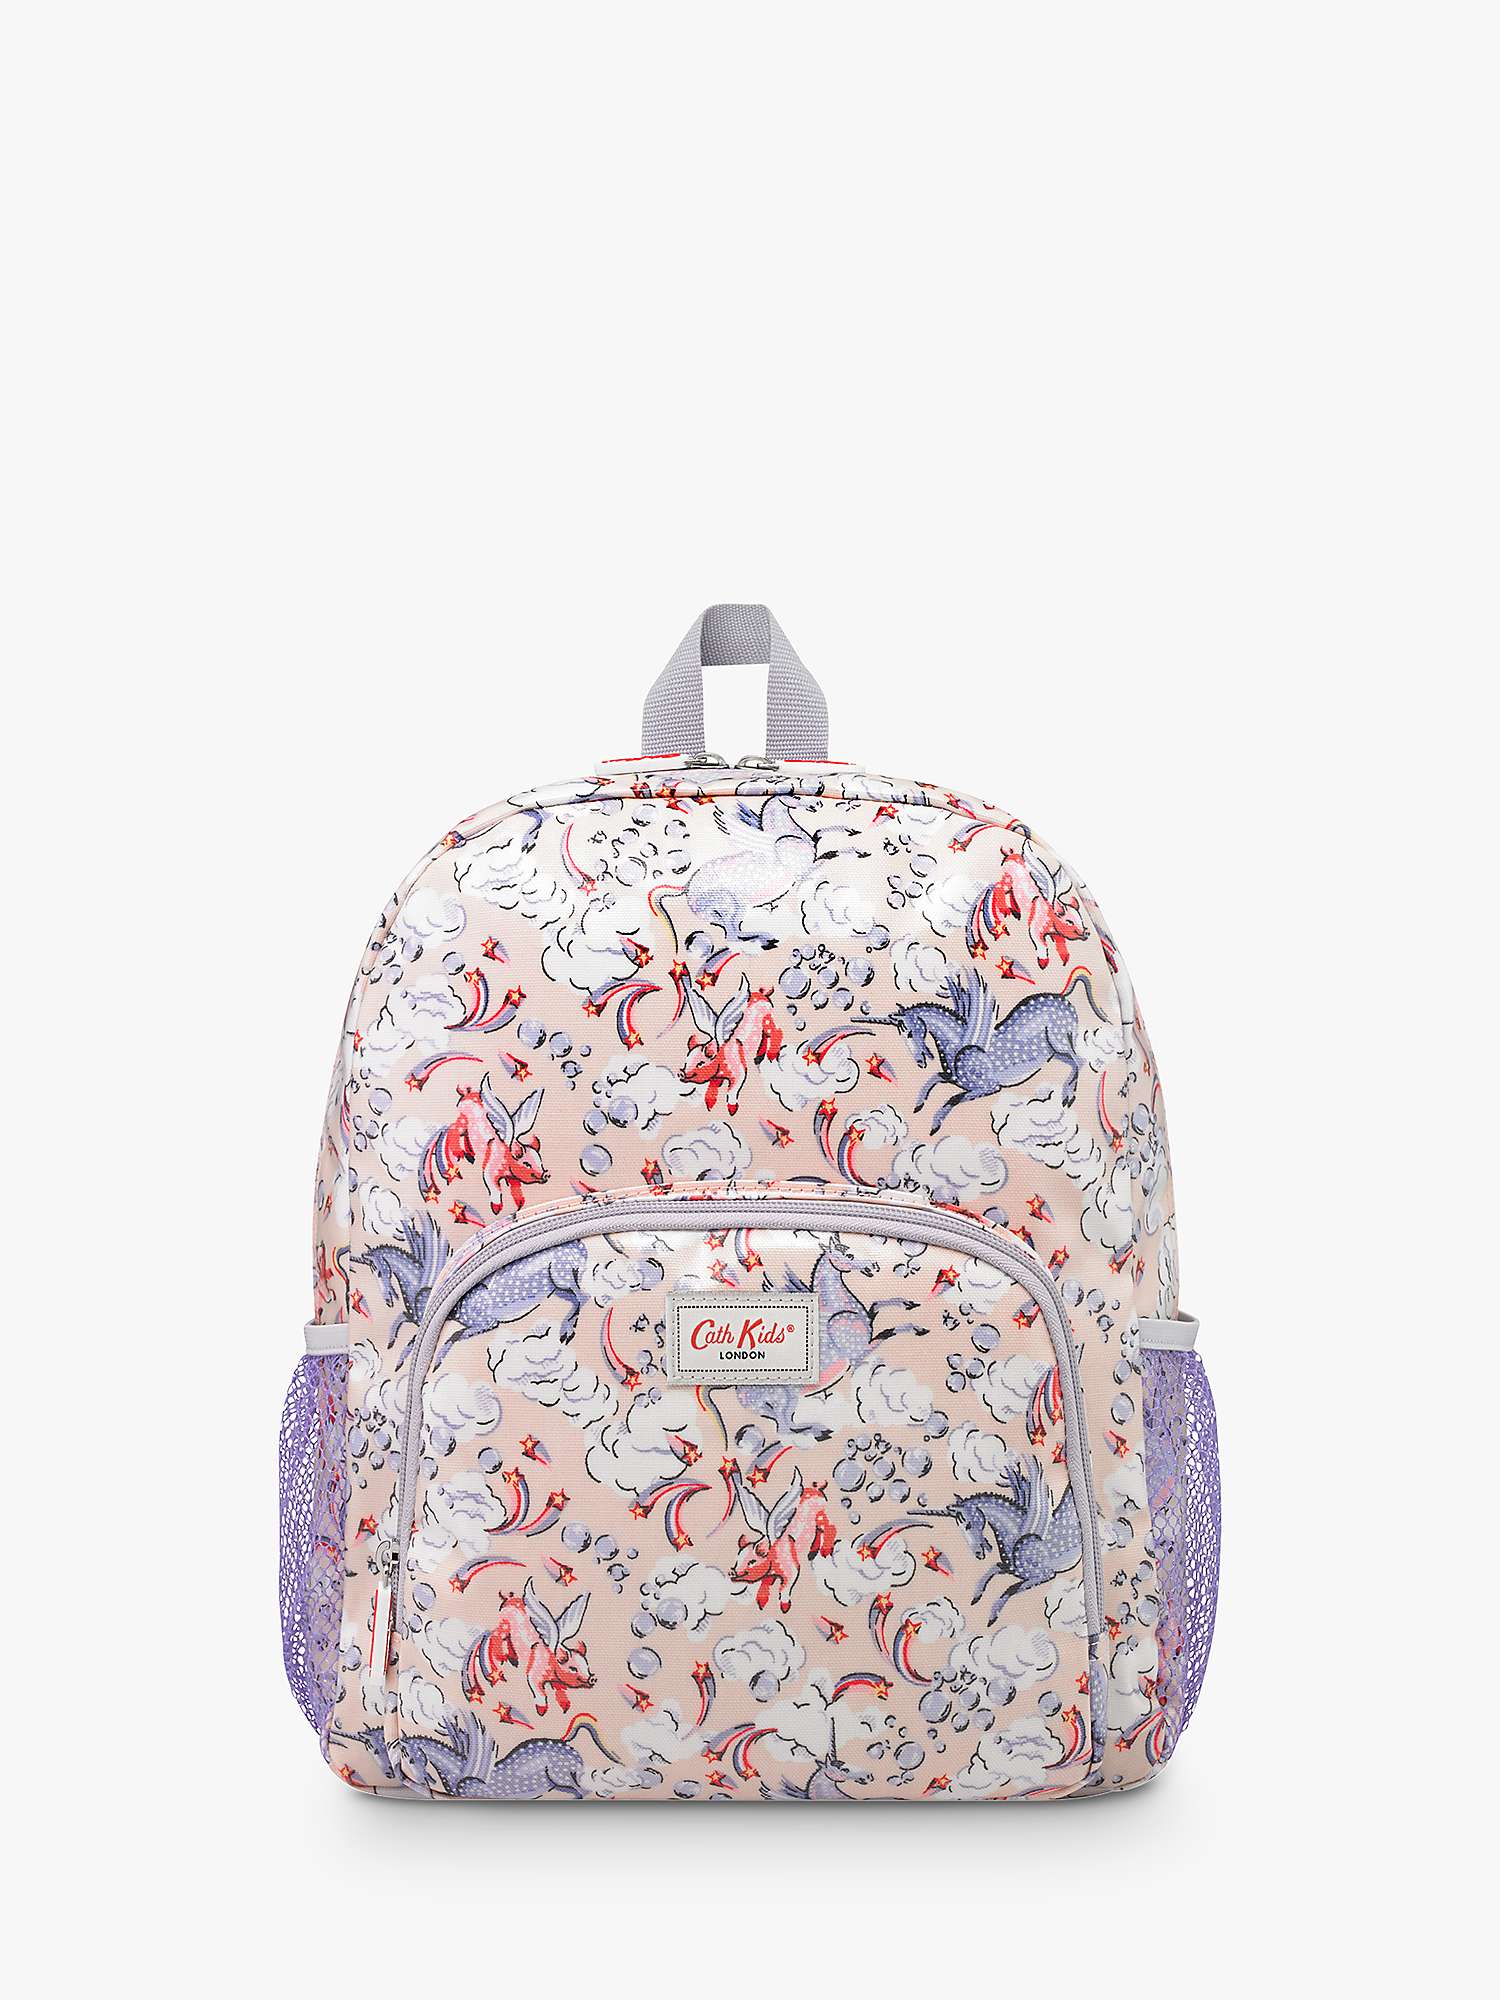 Cath Kidston Kids' Unicorn Large Backpack, Pink at John Lewis & Partners